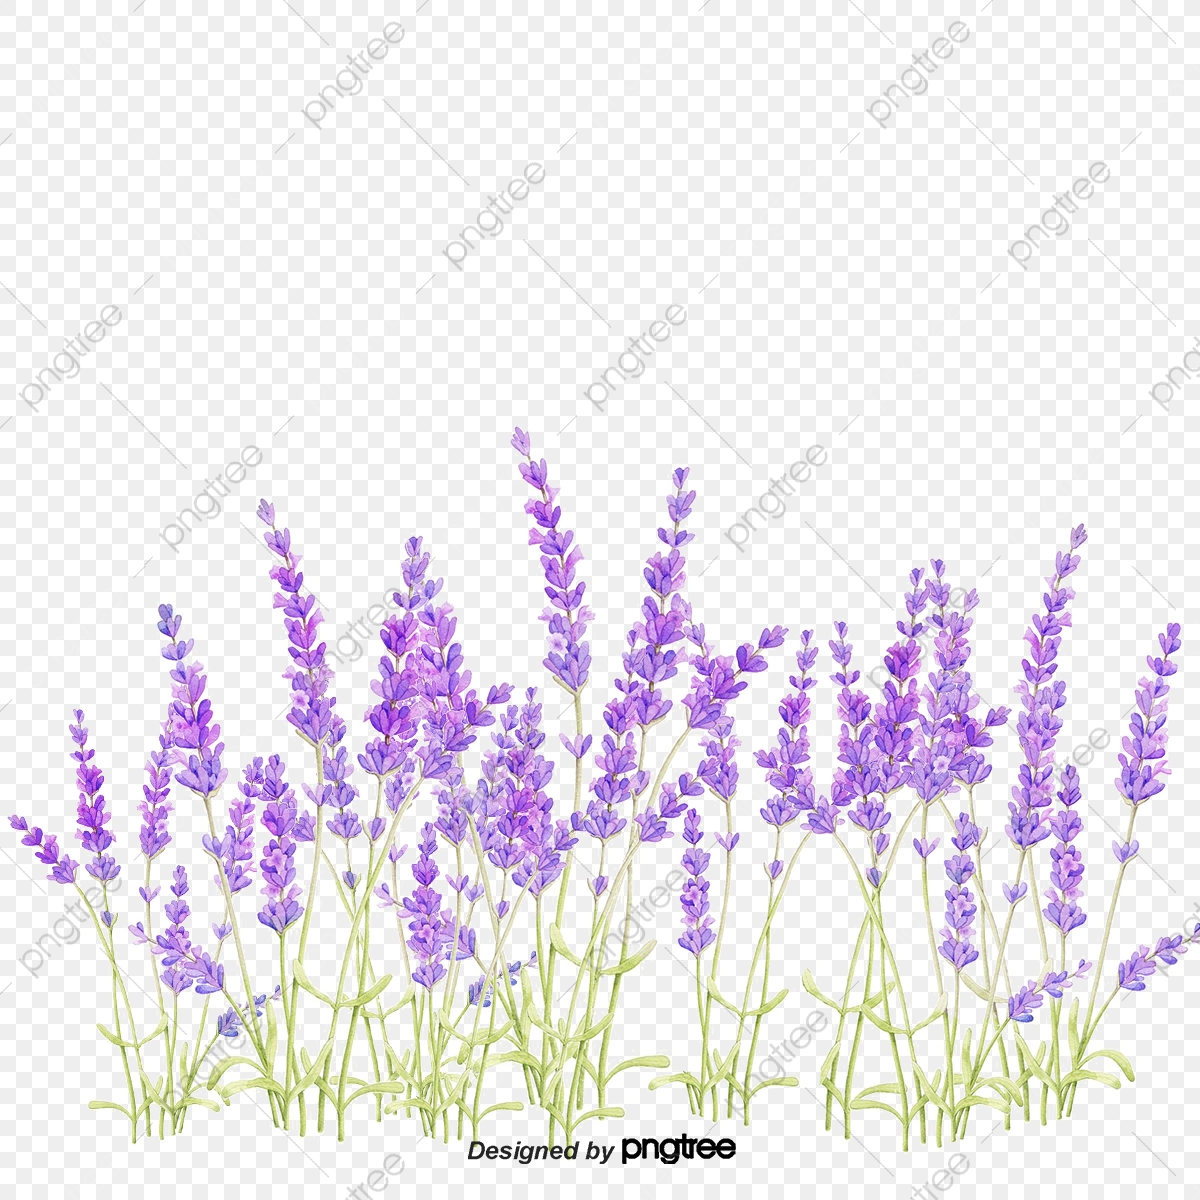 lavender clipart painted